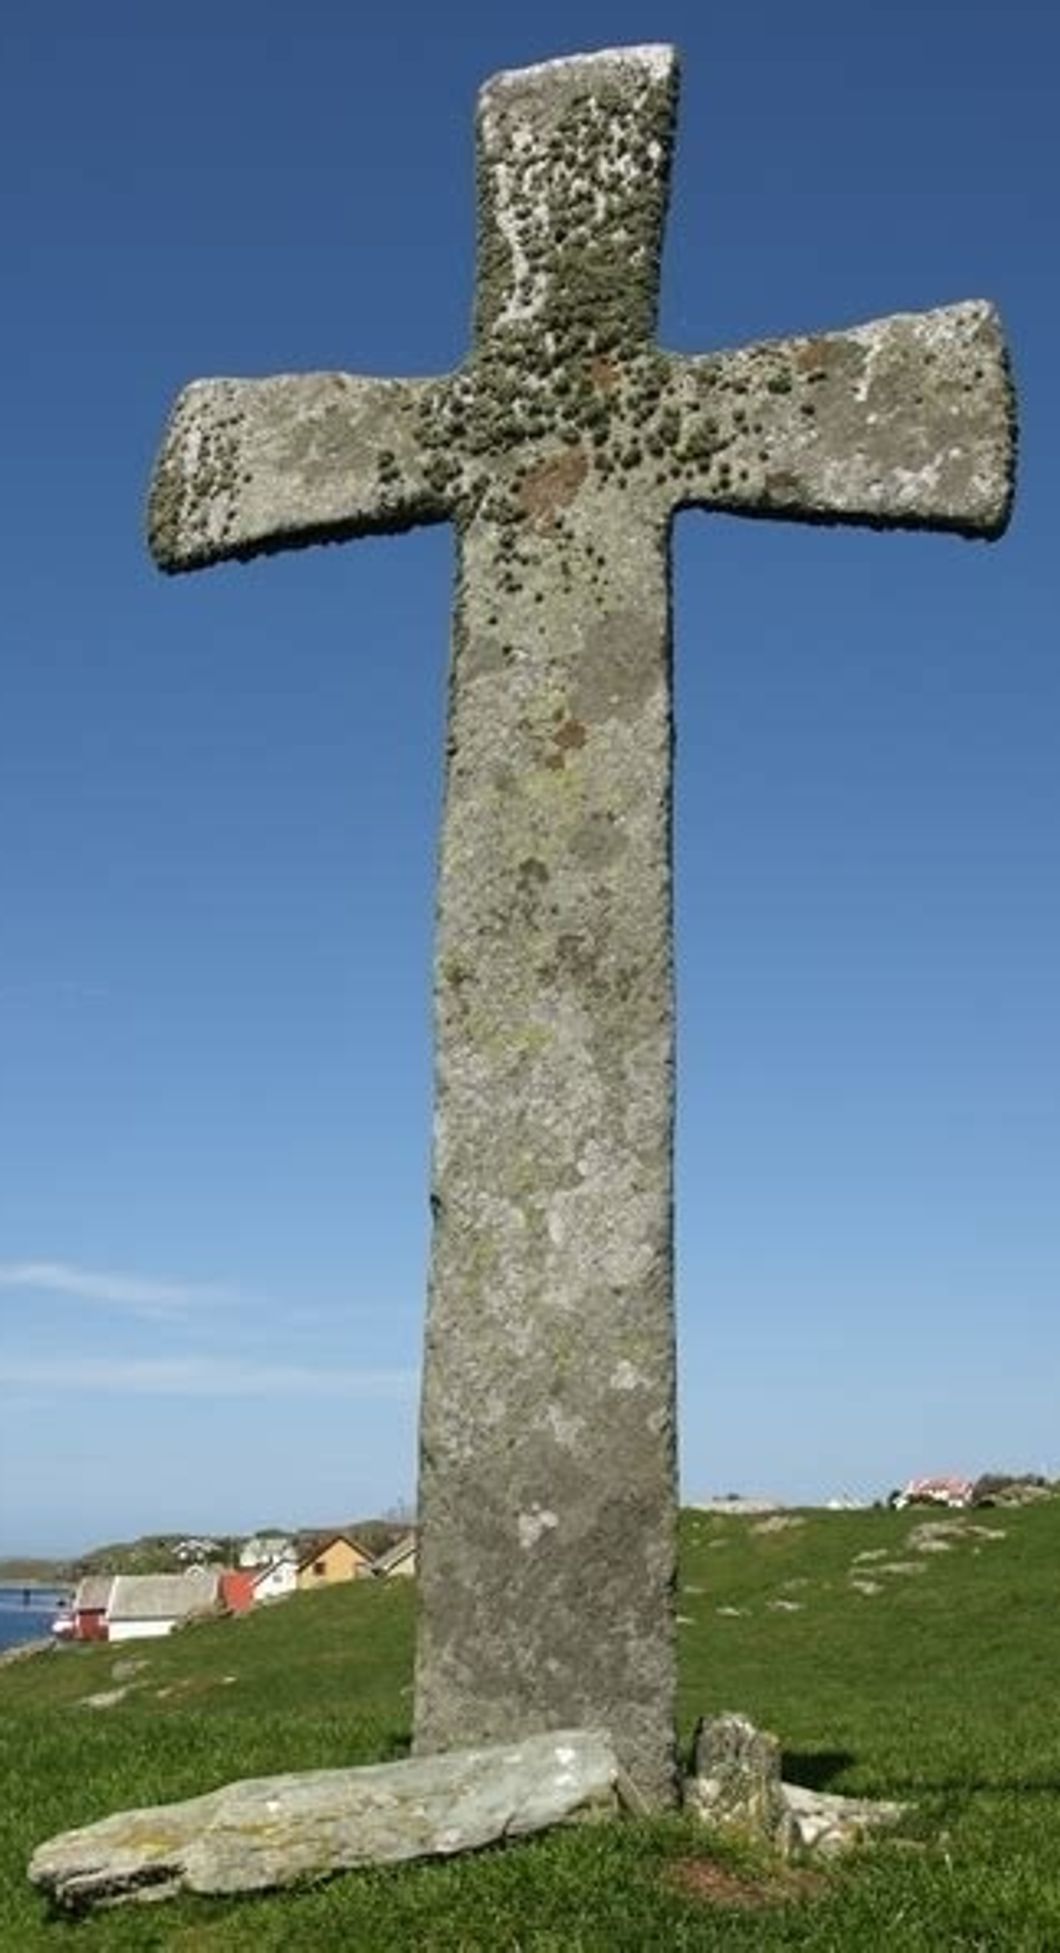 http://commons.wikimedia.org/wiki/File:Stone_cross,_Leiasundet,_Kvits%C3%B8y_Rogaland.jpg